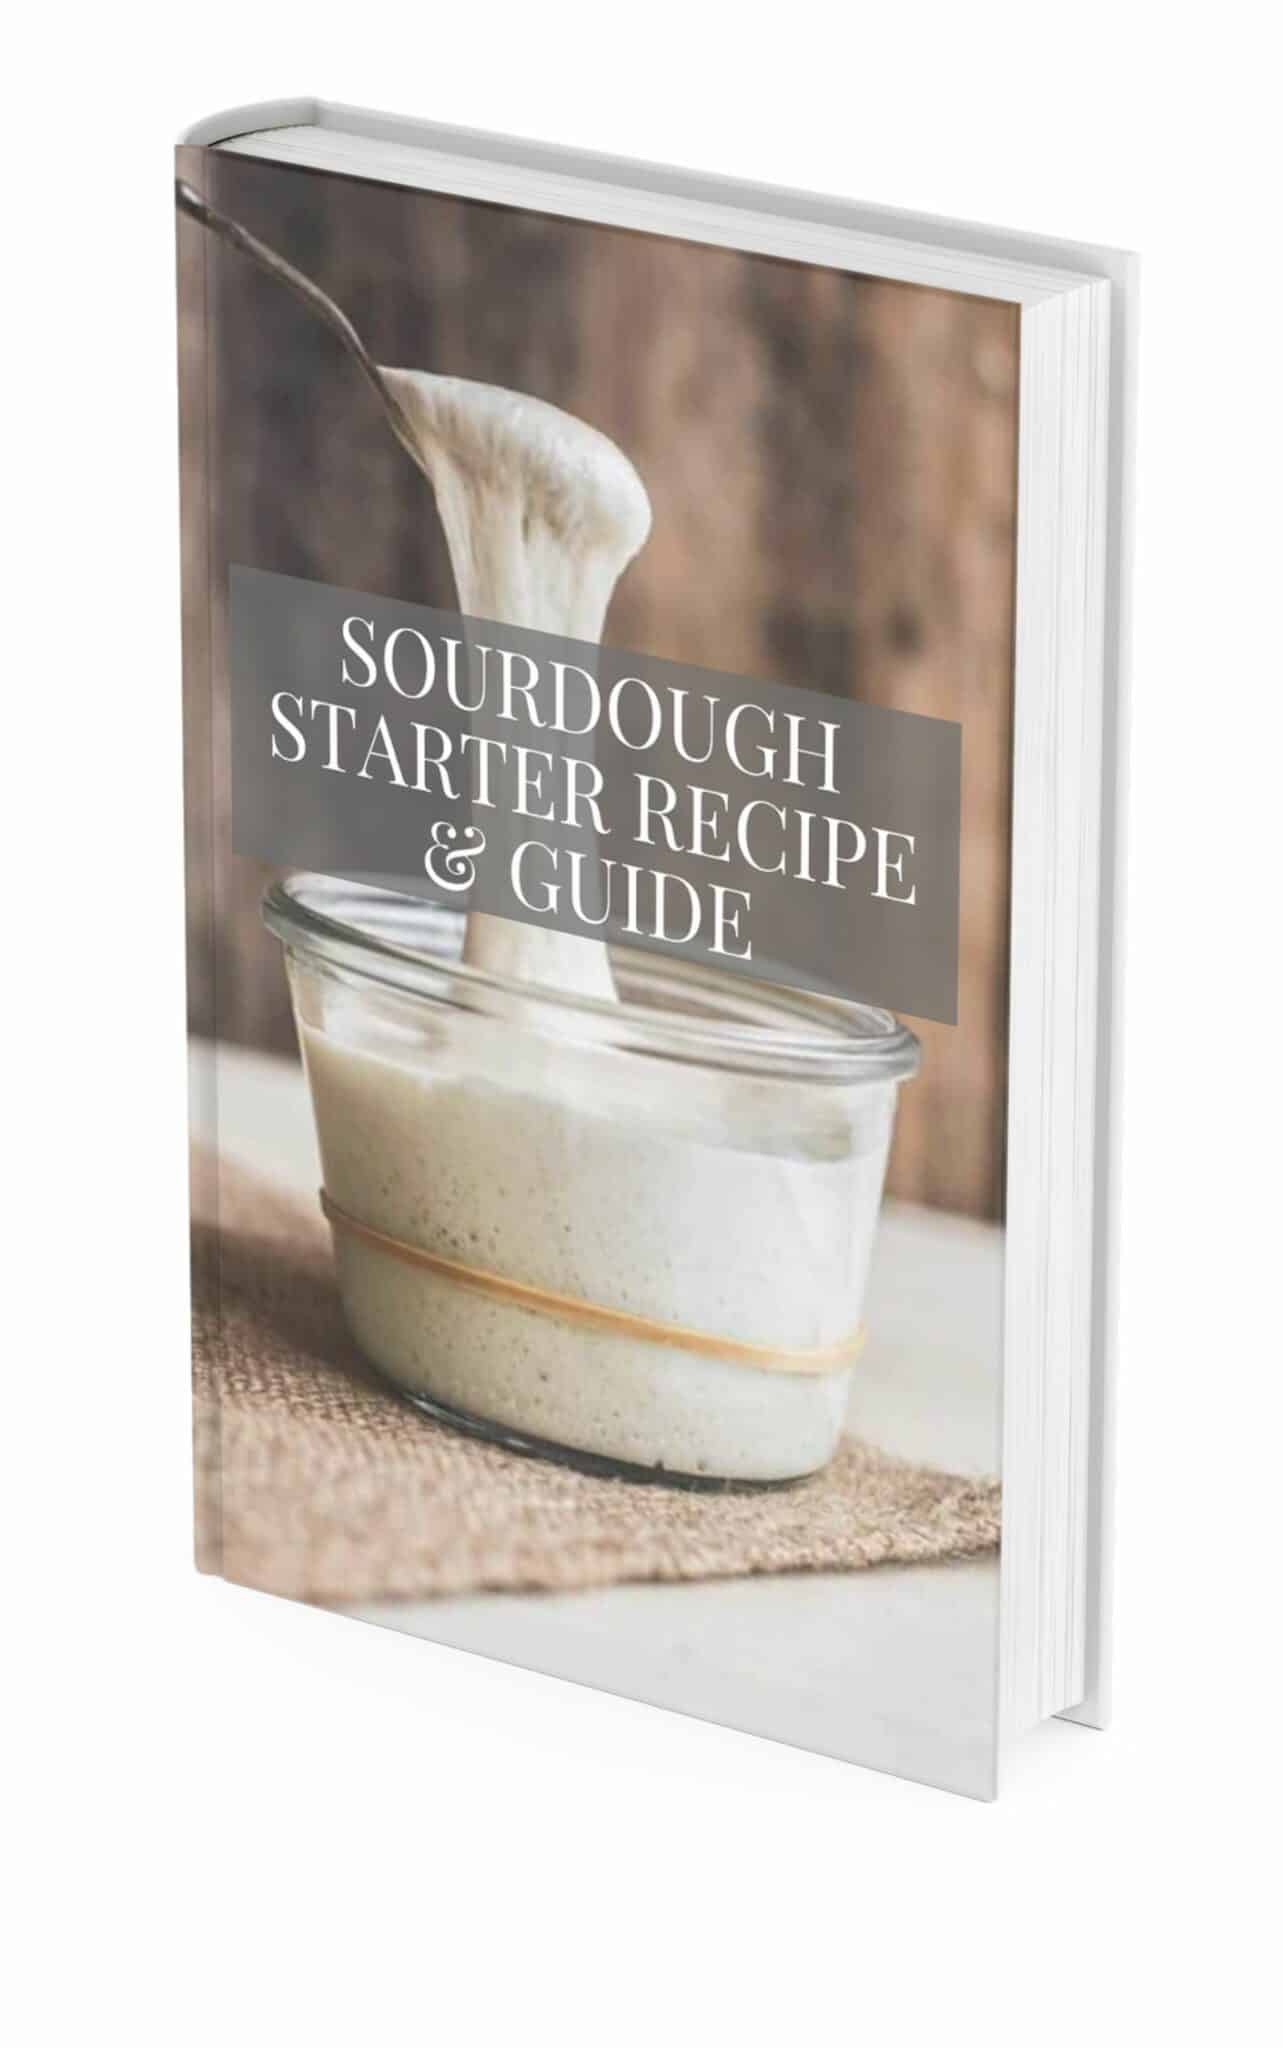 Sourdough Starter Recipe and Guide ebook cover.